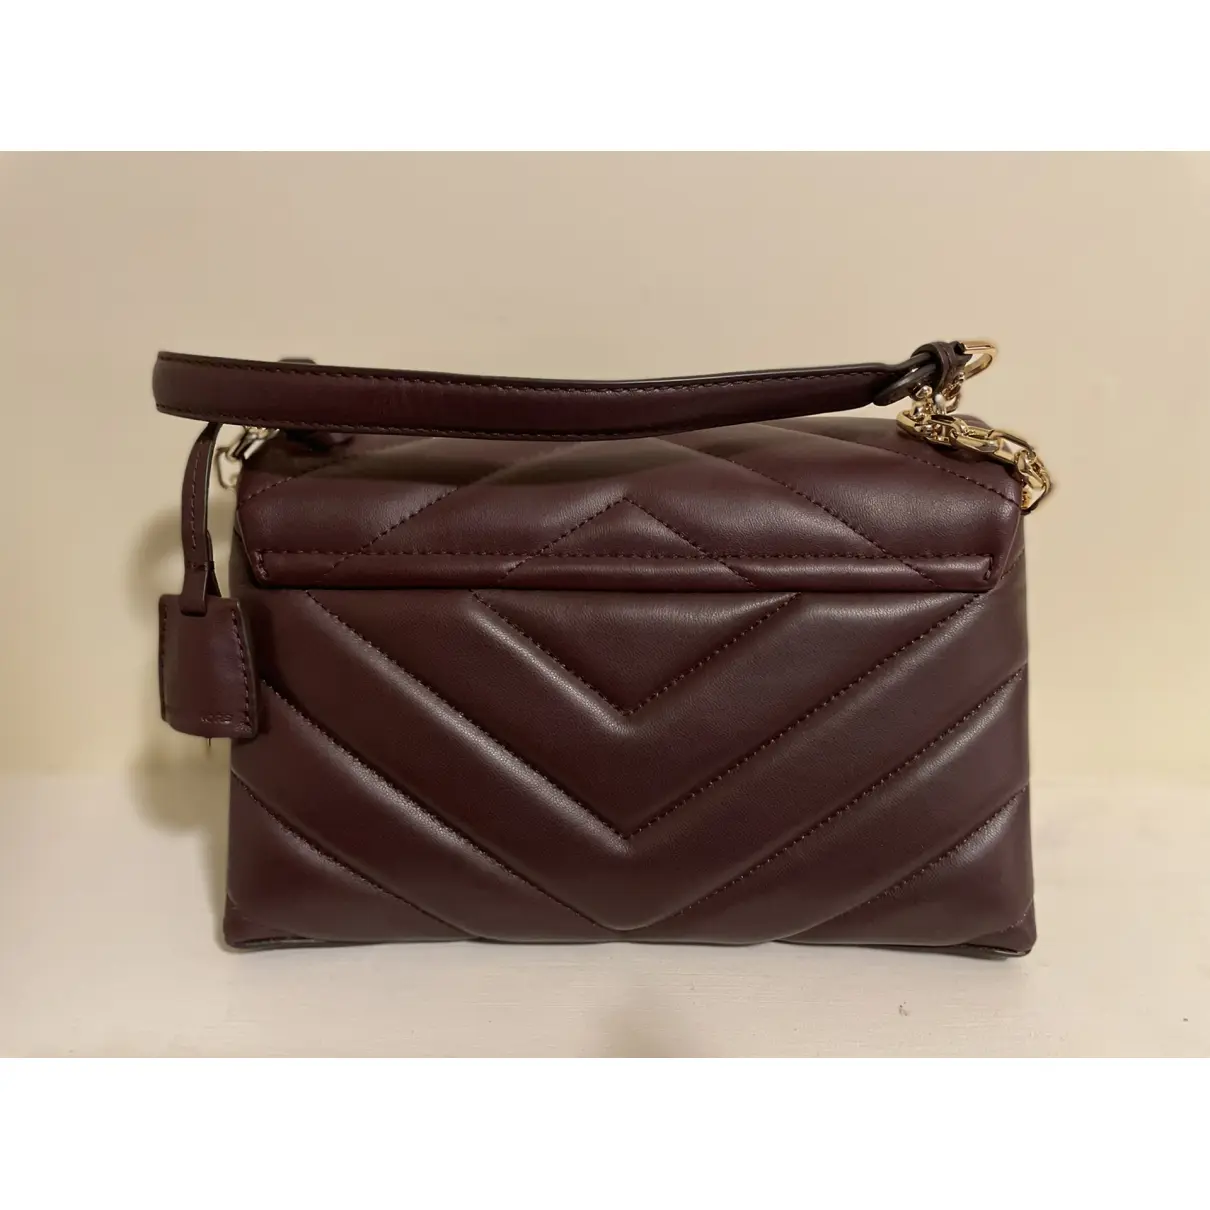 Whitney leather handbag Michael Kors